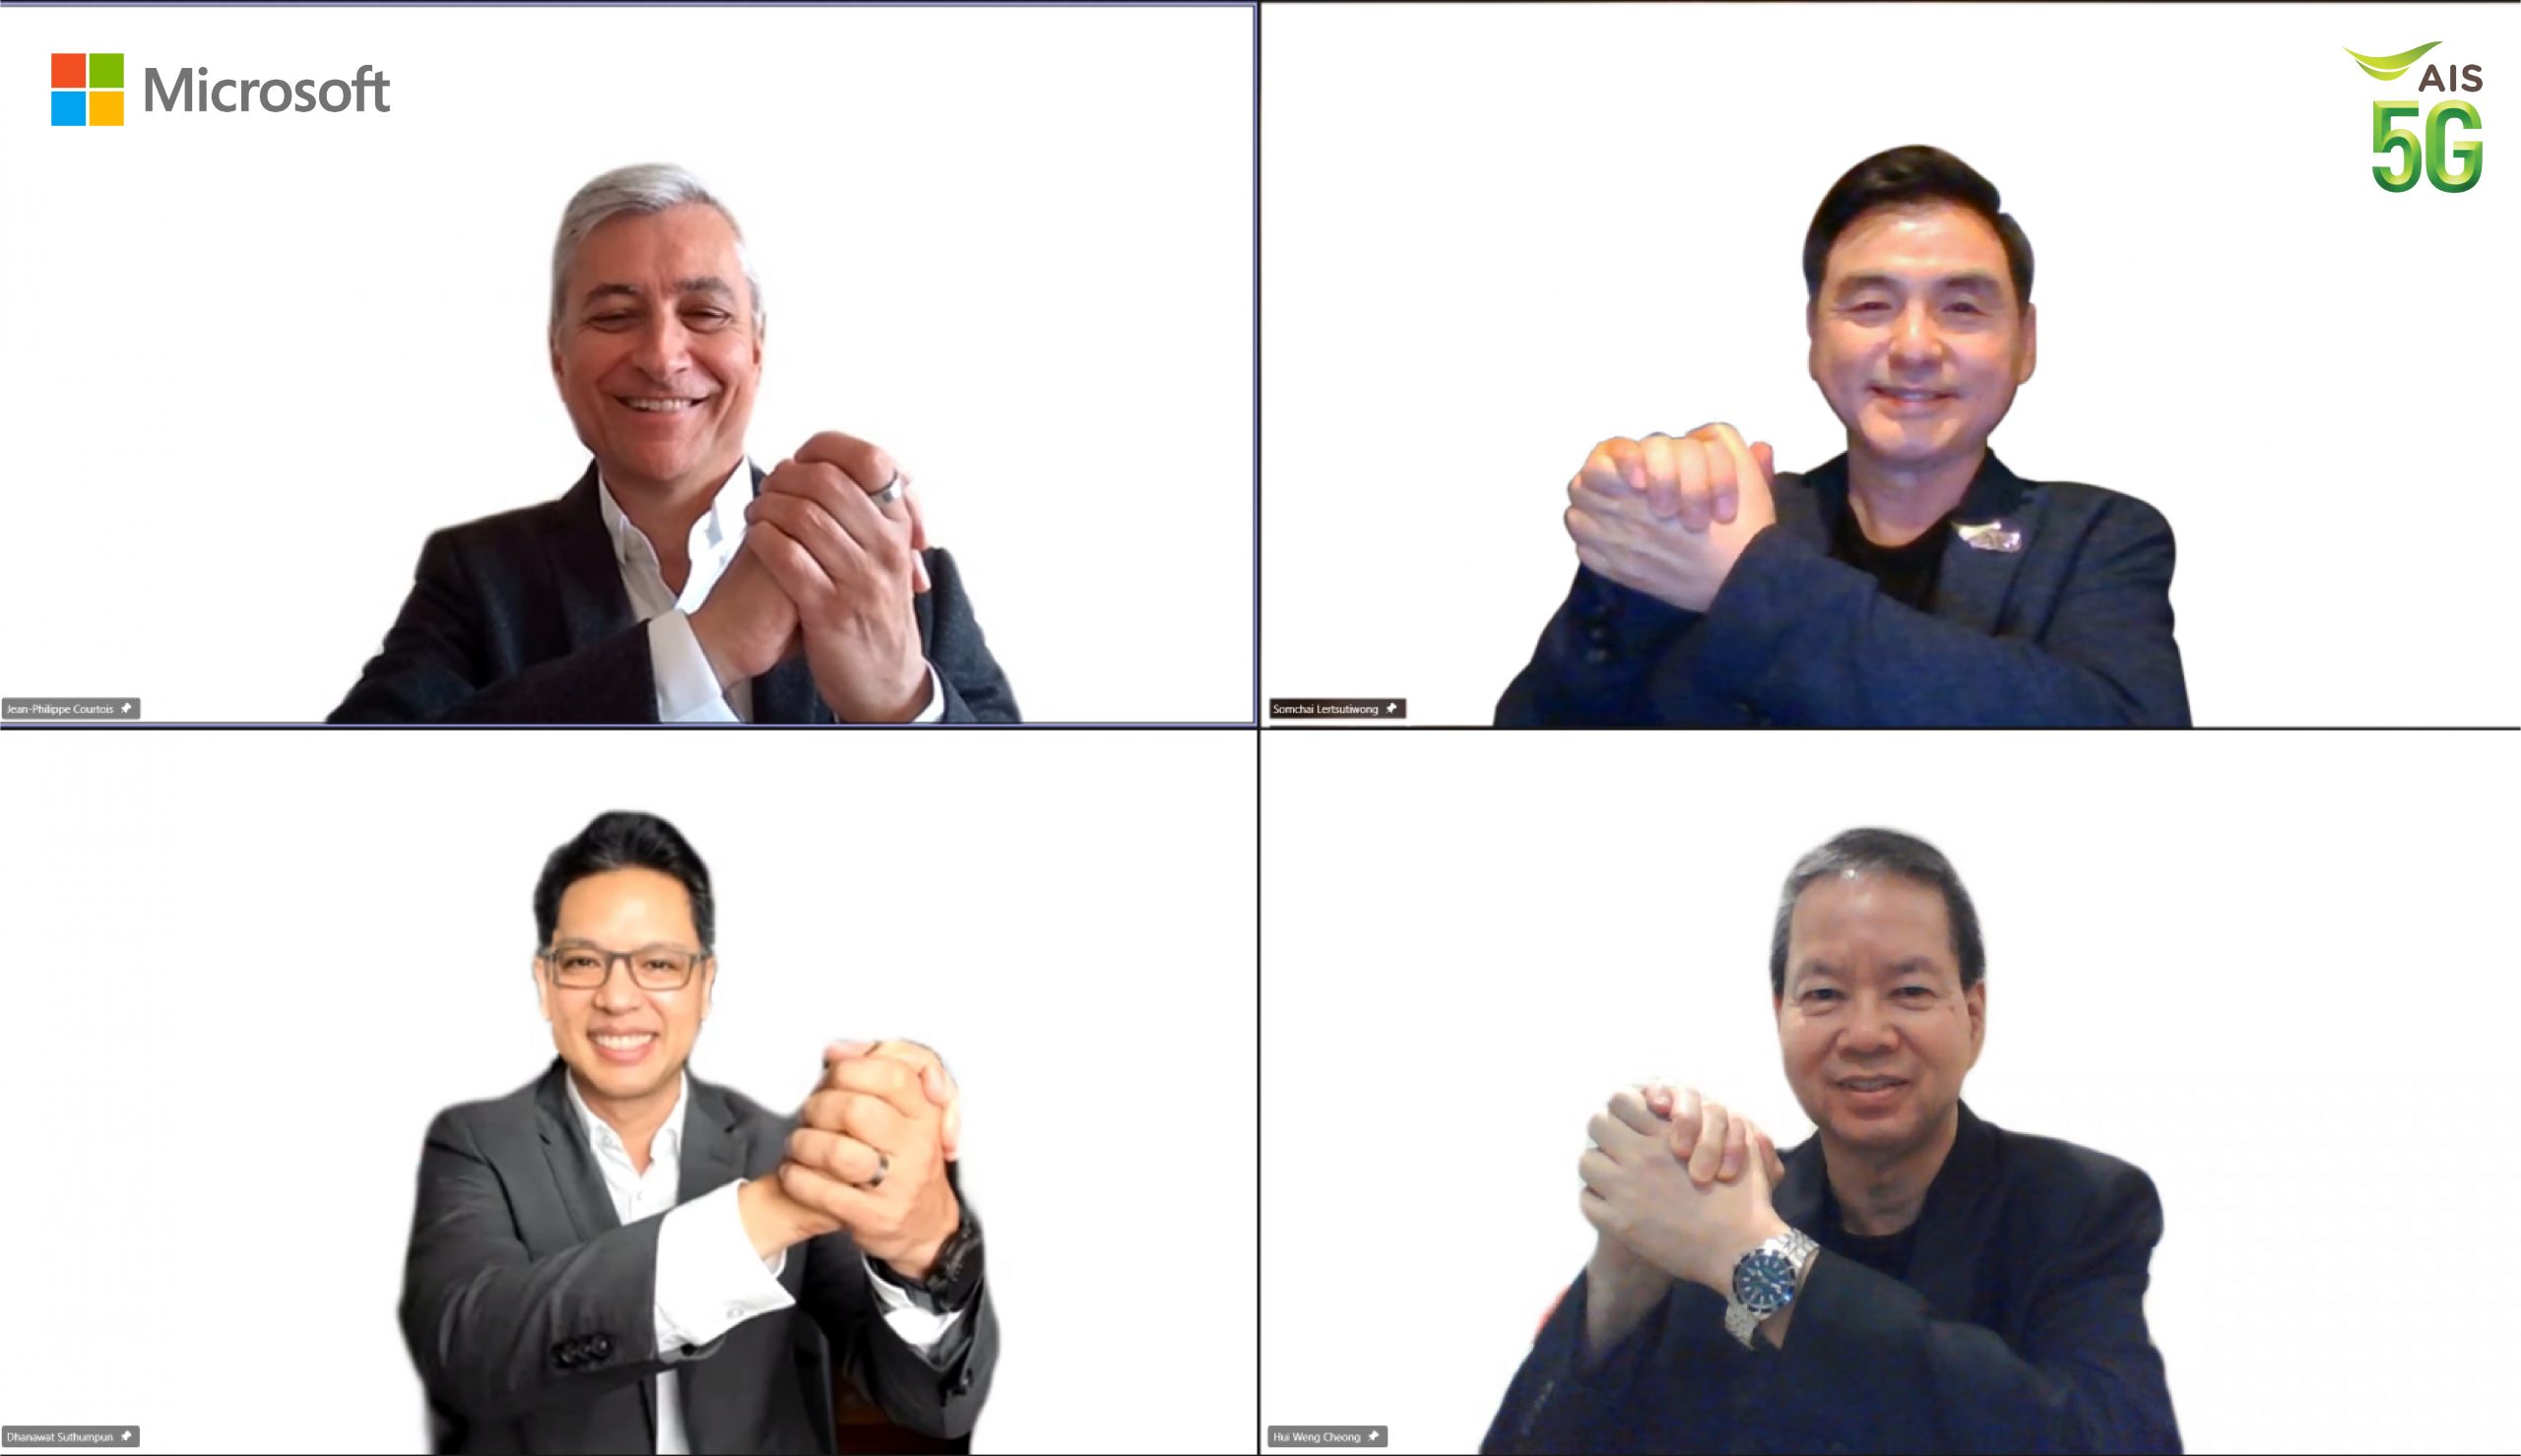 Microsoft and AIS executives in virtual photo shoot on Microsoft Teams